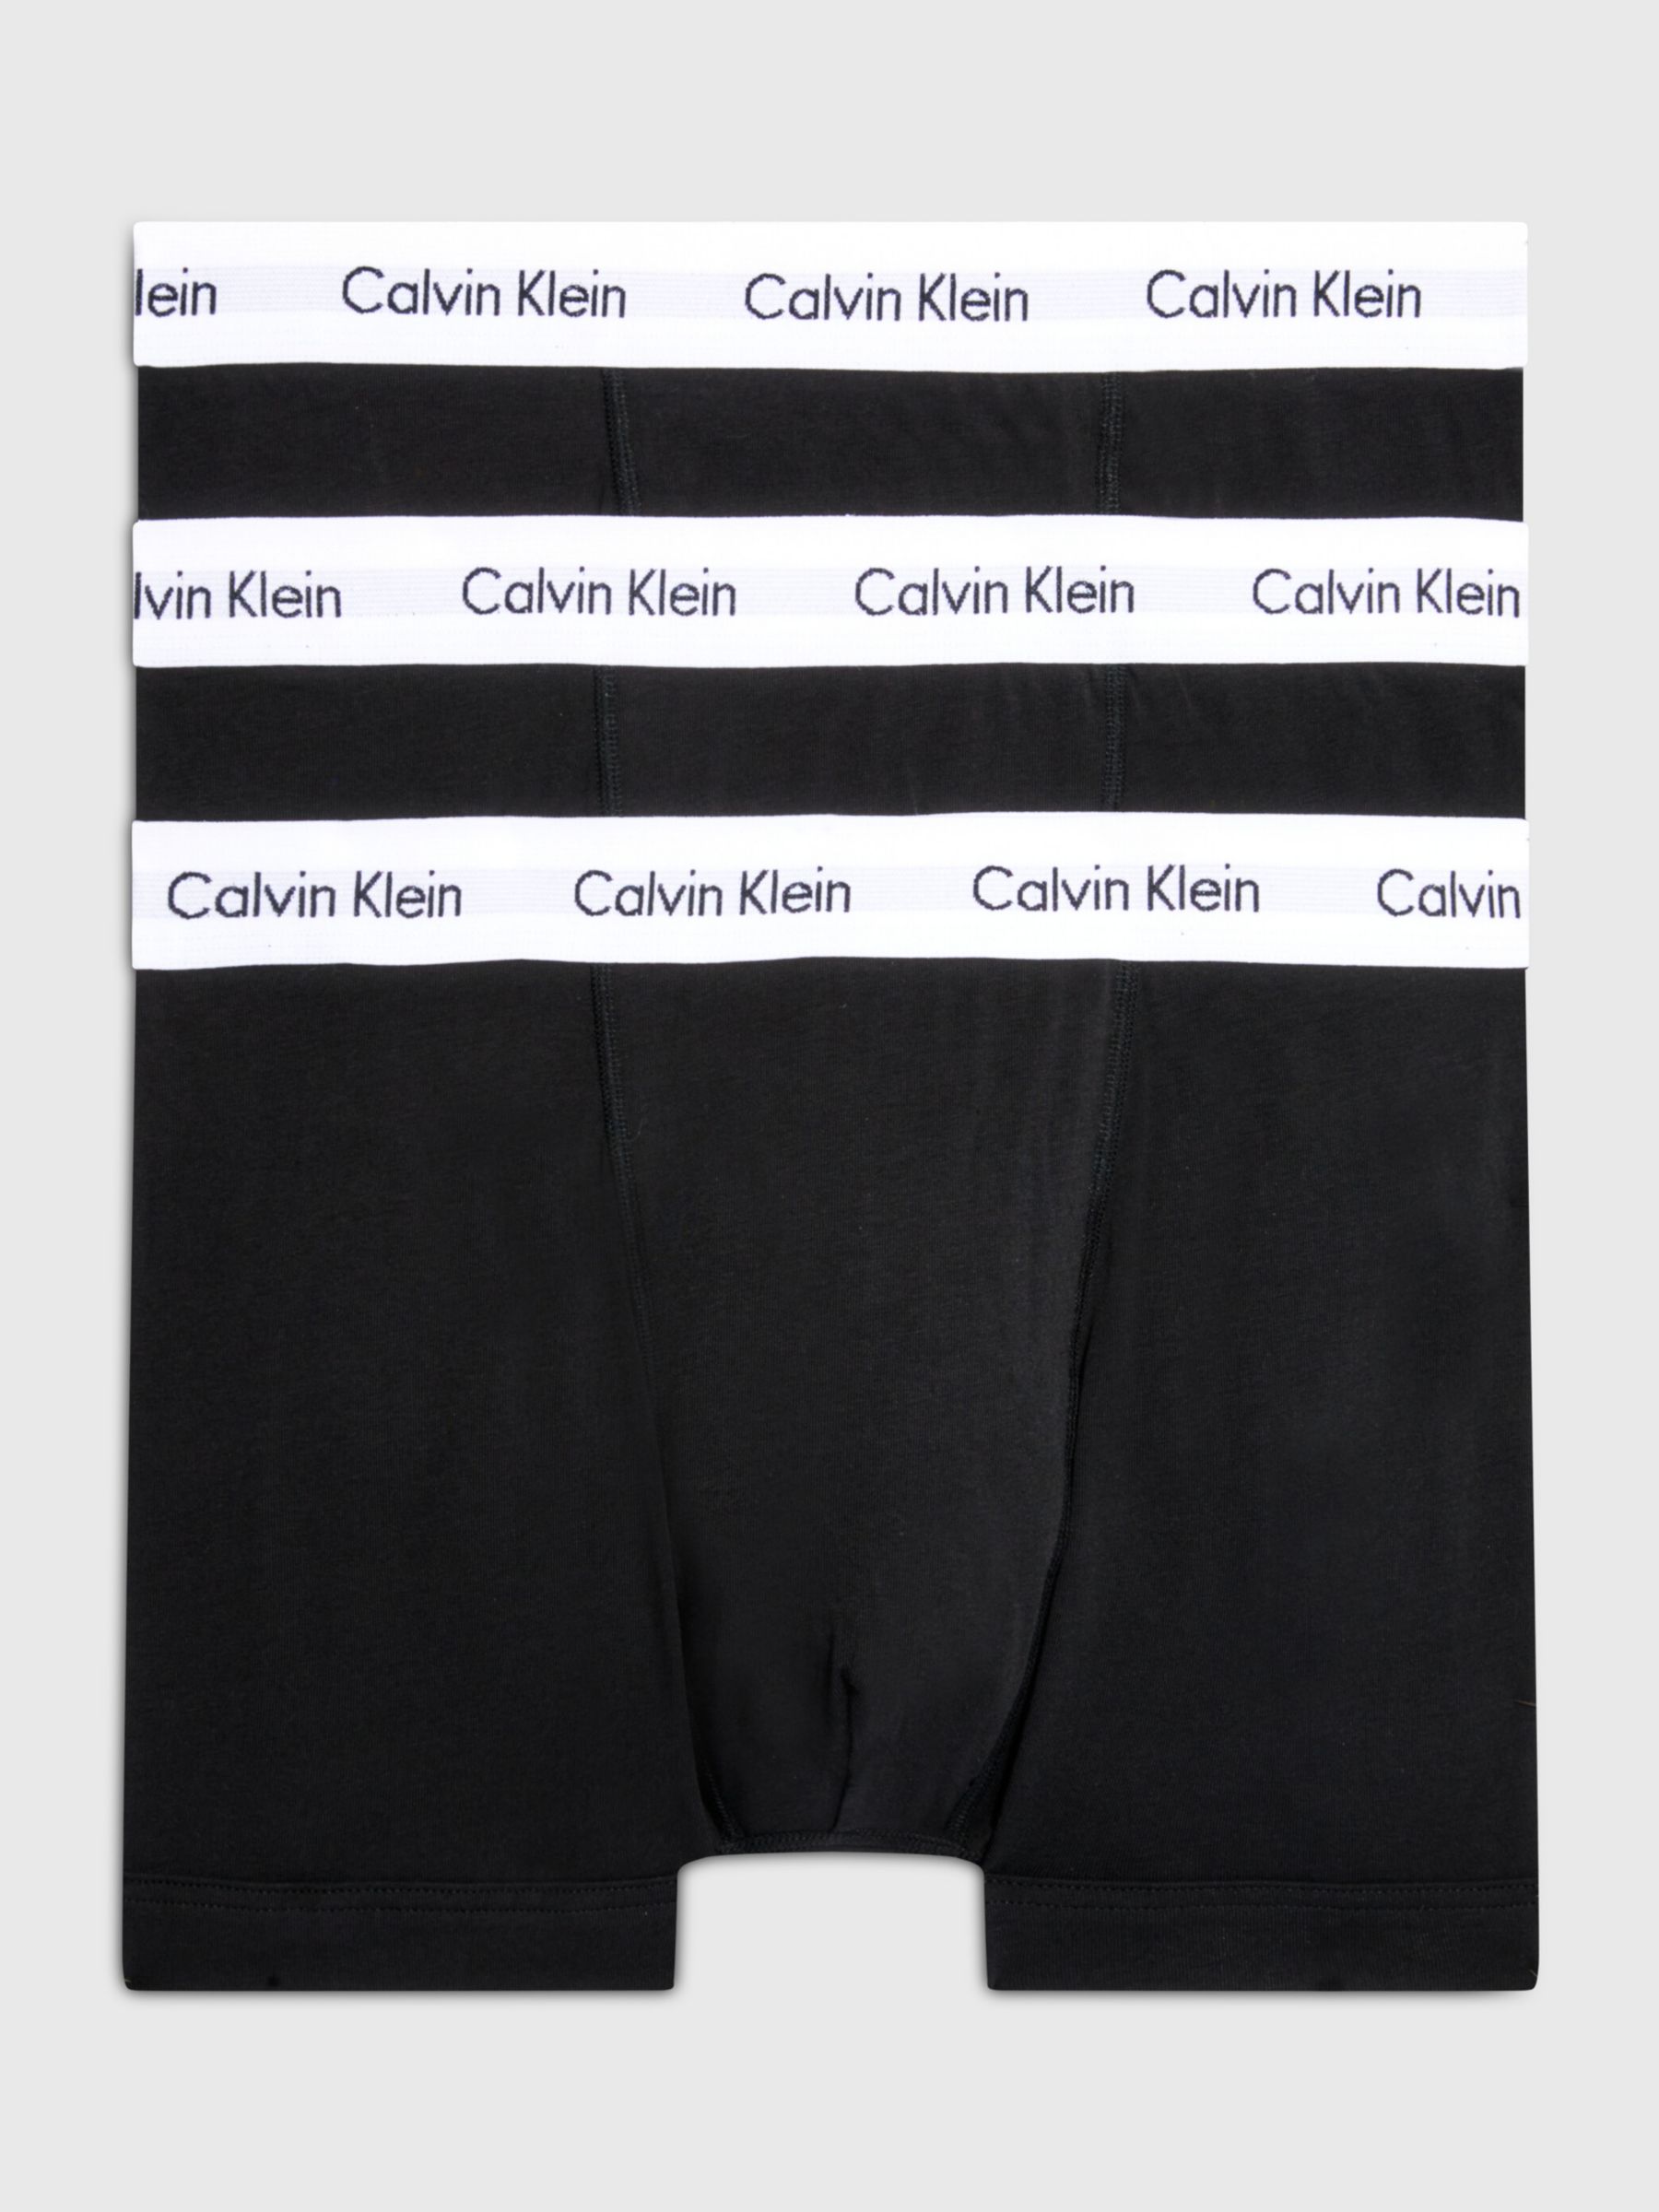 Calvin Klein Regular Cotton Stretch Trunks, Pack of 3, Black/White